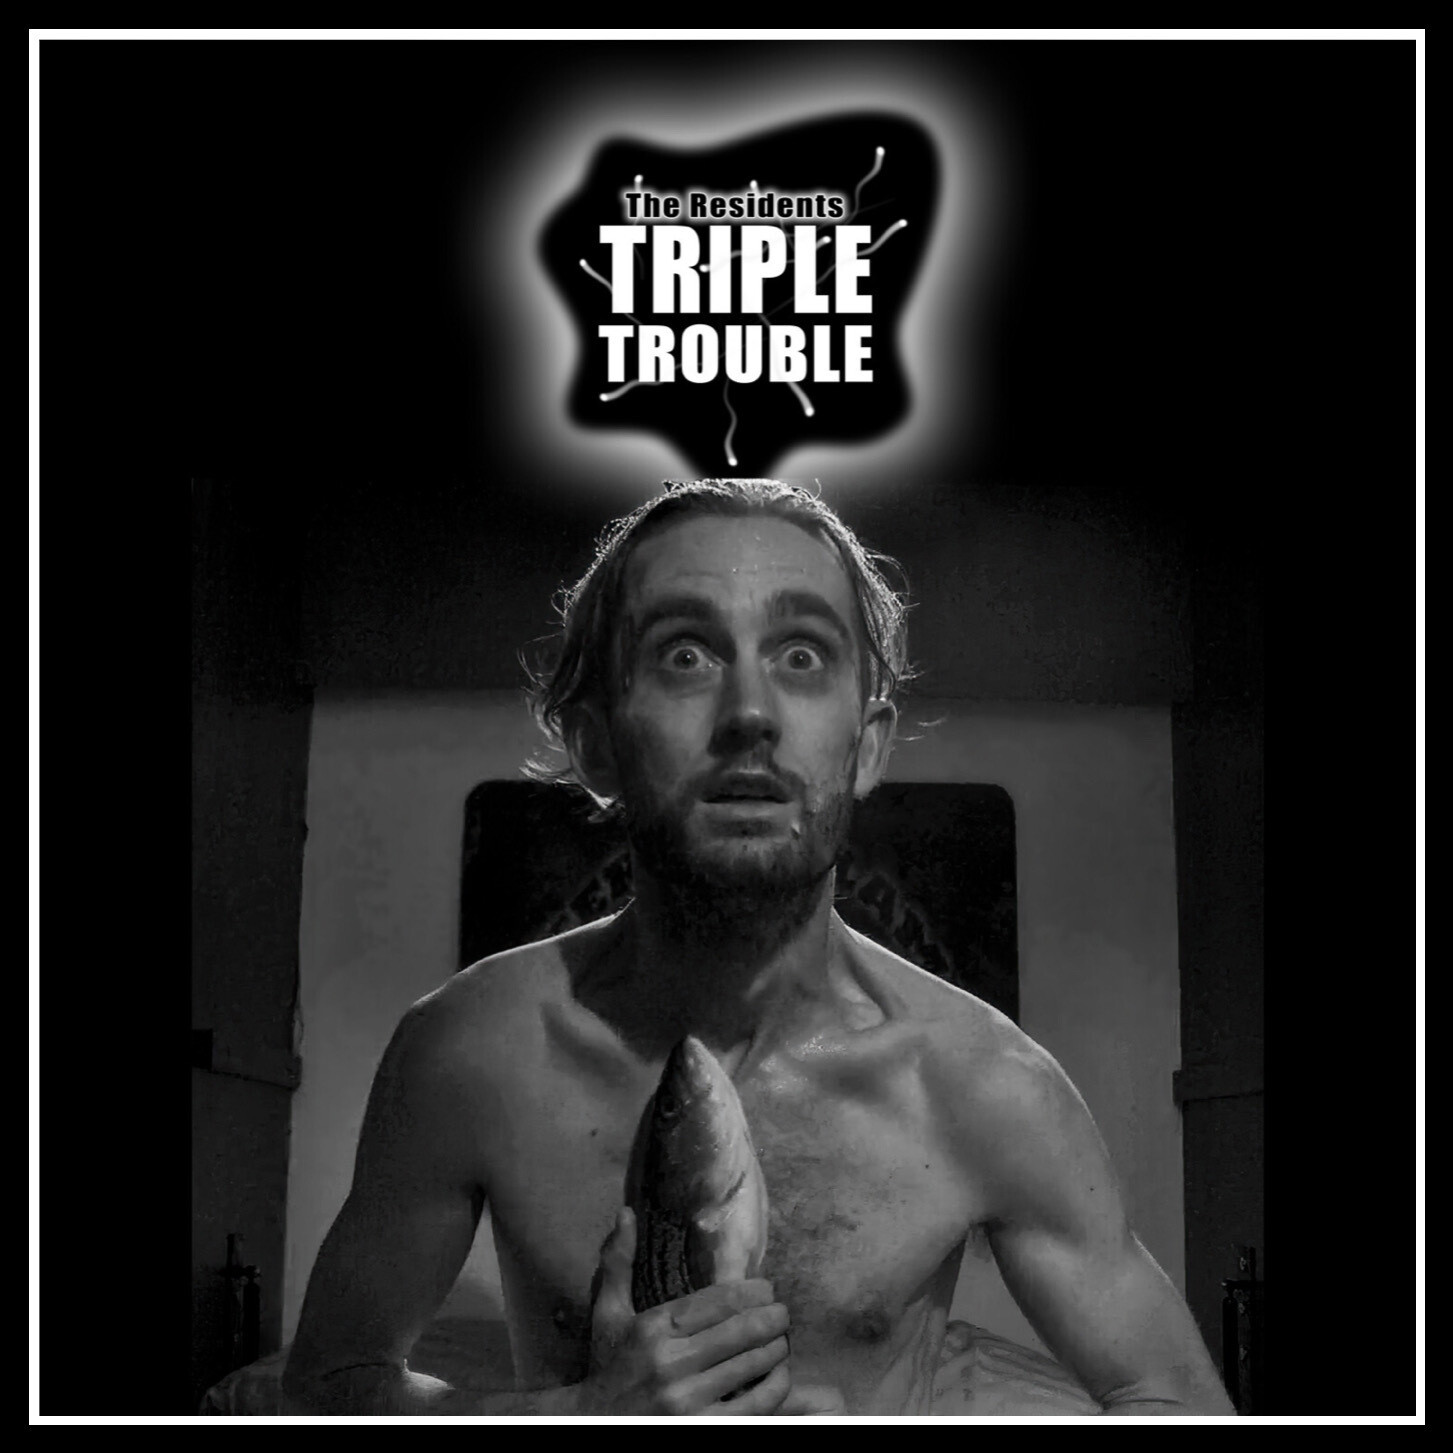 PR-051.1 - The Residents - Triple Trouble - Zoetrop Picture Disc - LP